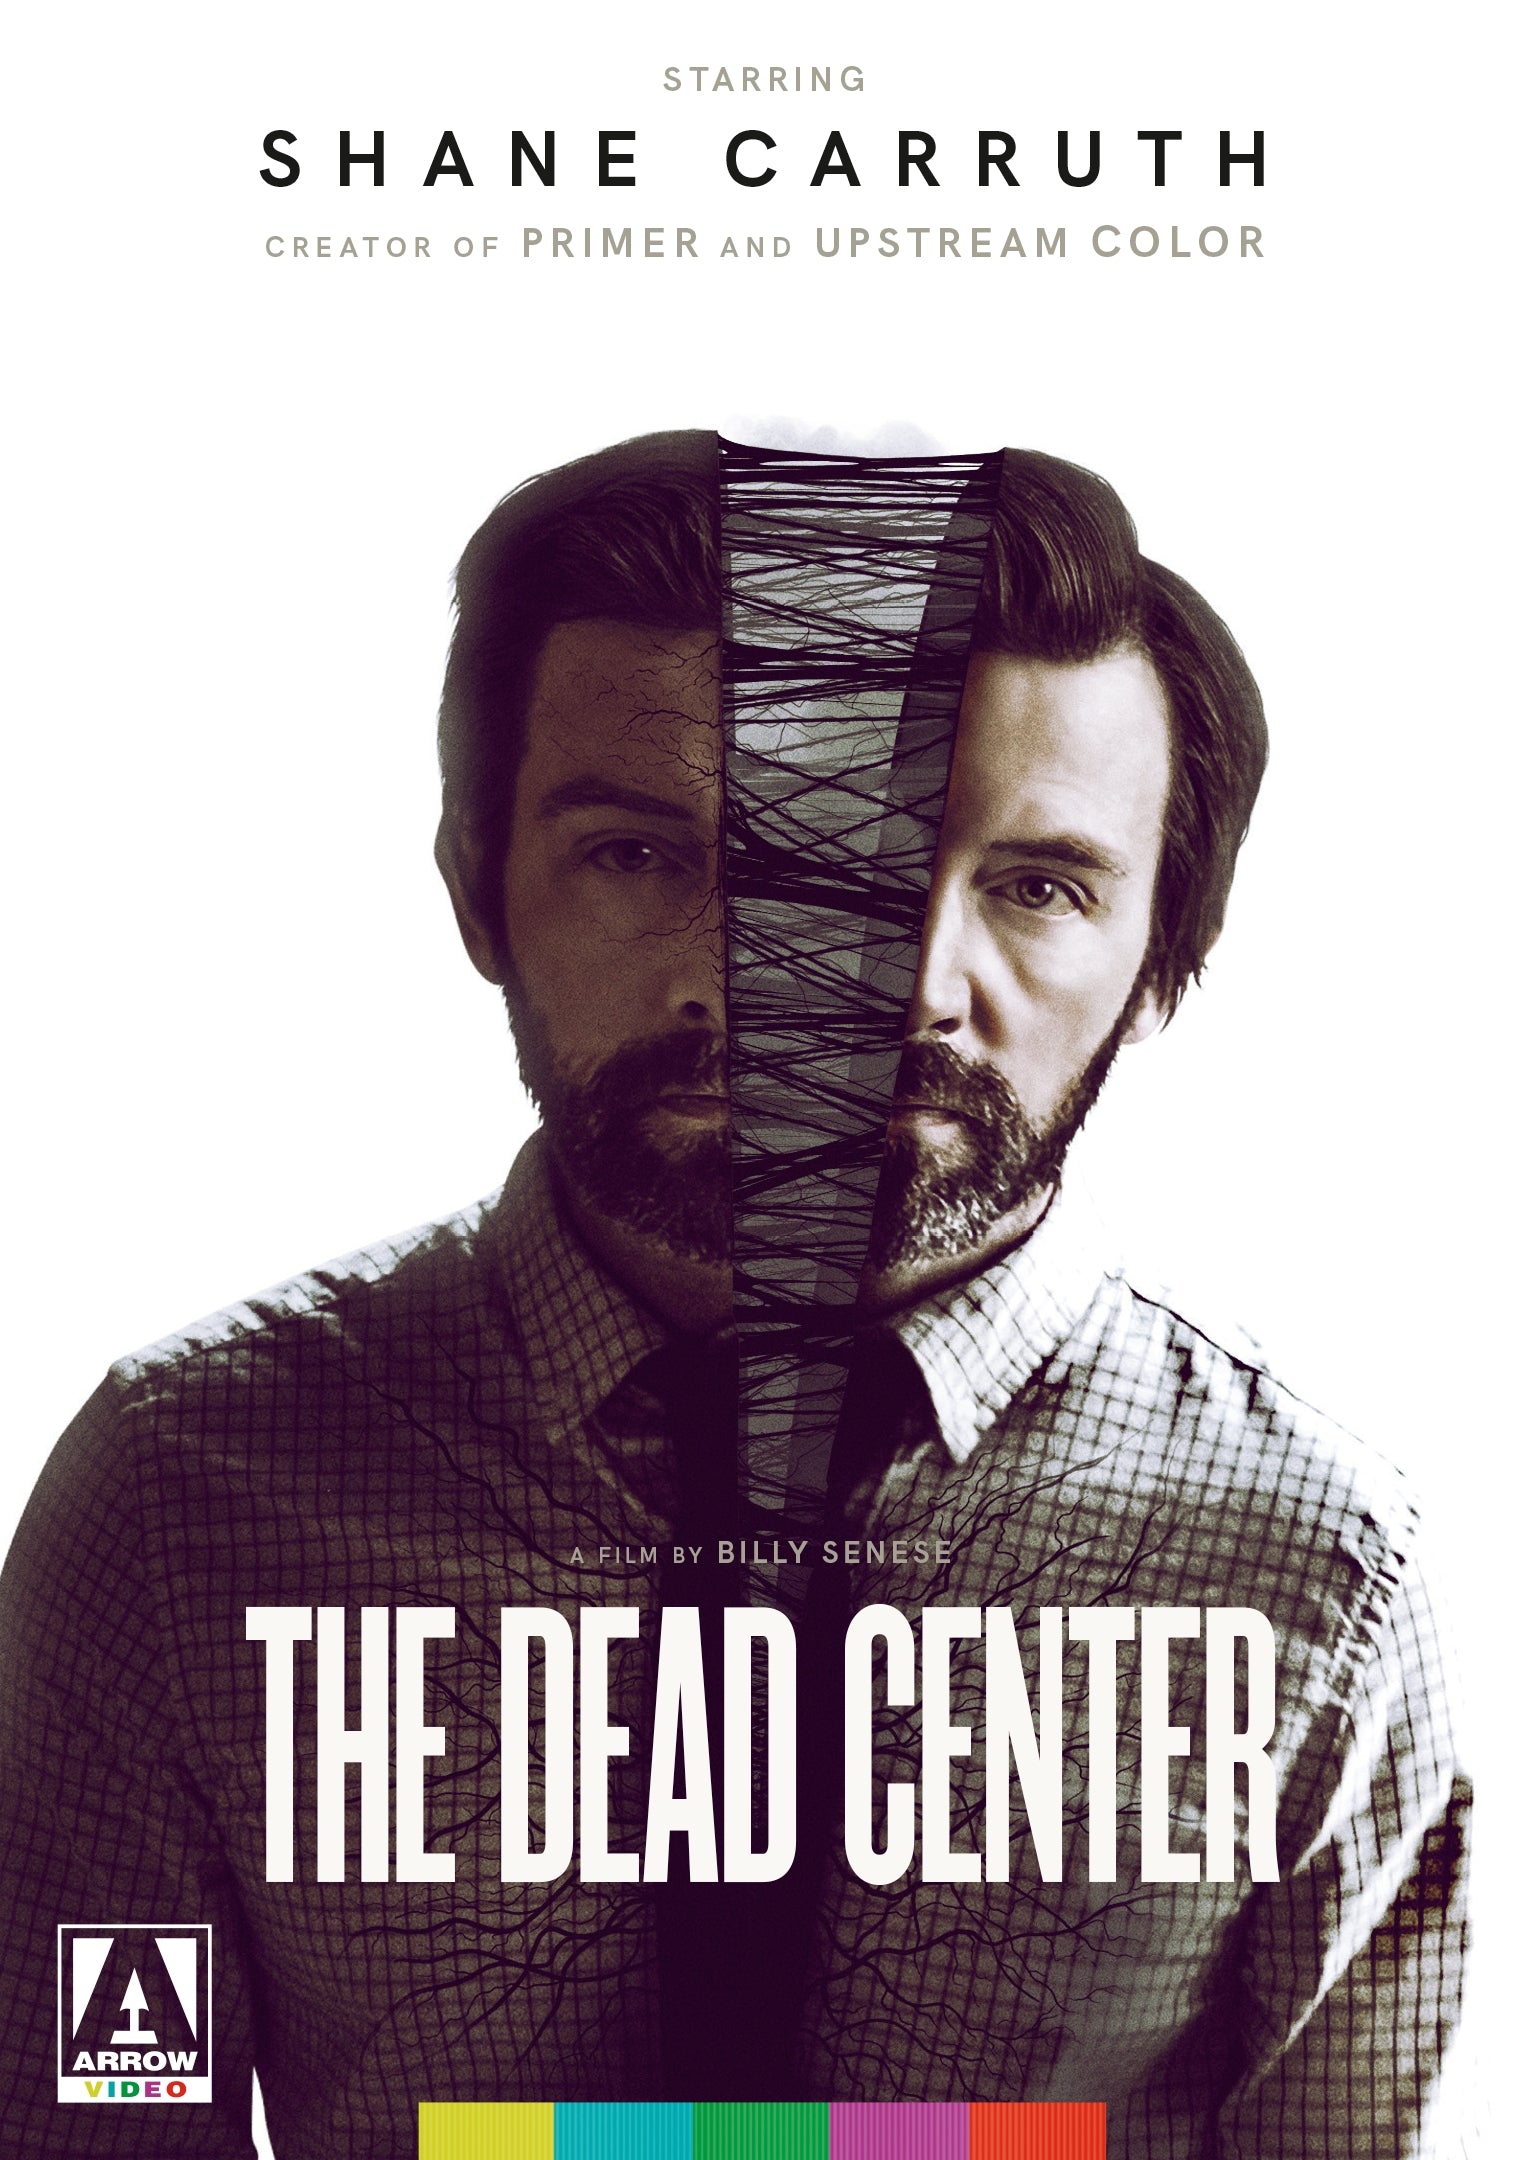 THE DEAD CENTER DVD